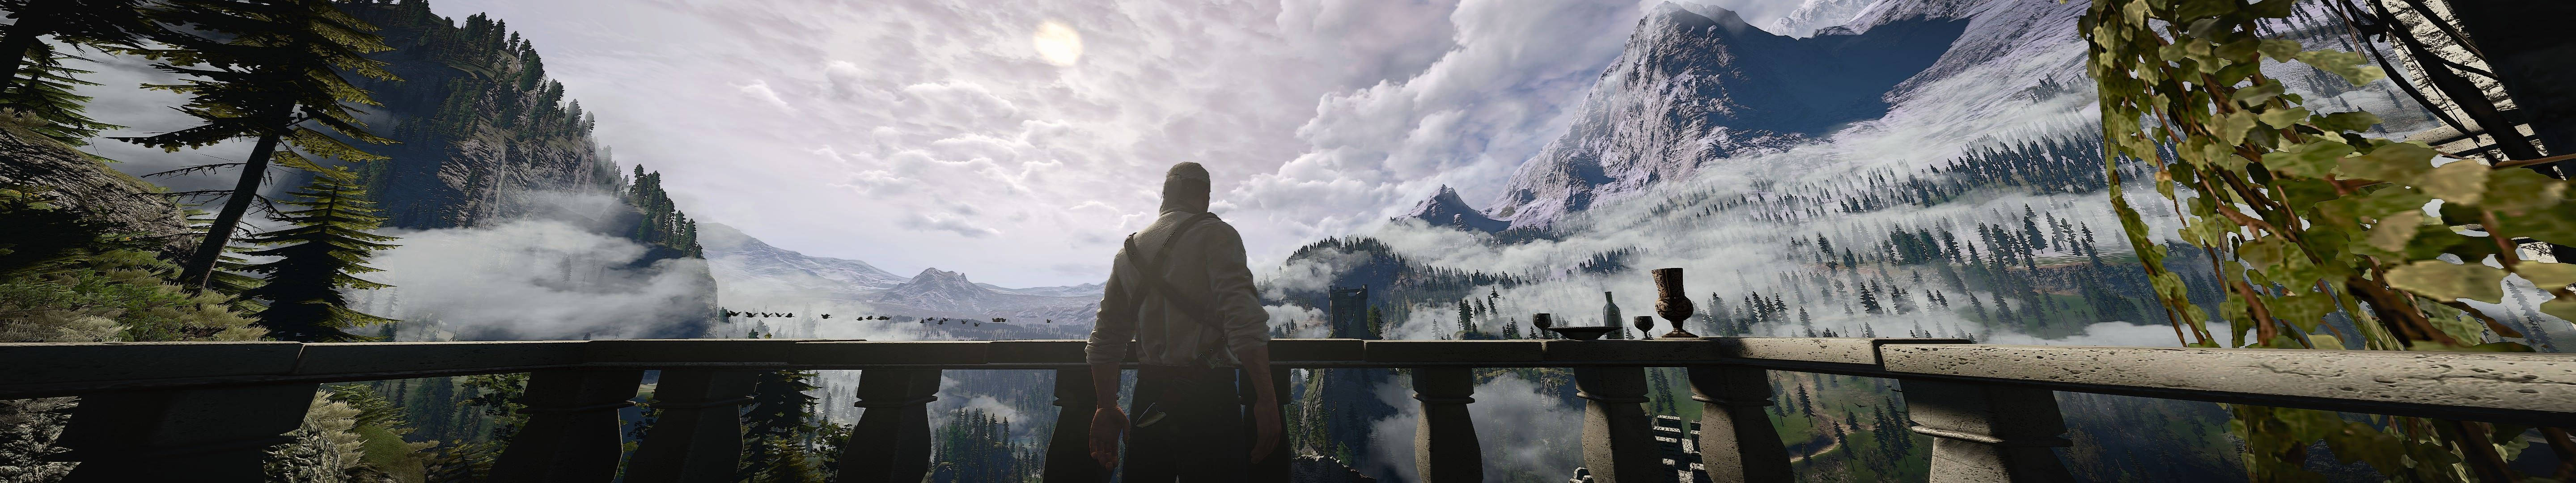 Witcher 3 Geralt Balcony View Wallpaper